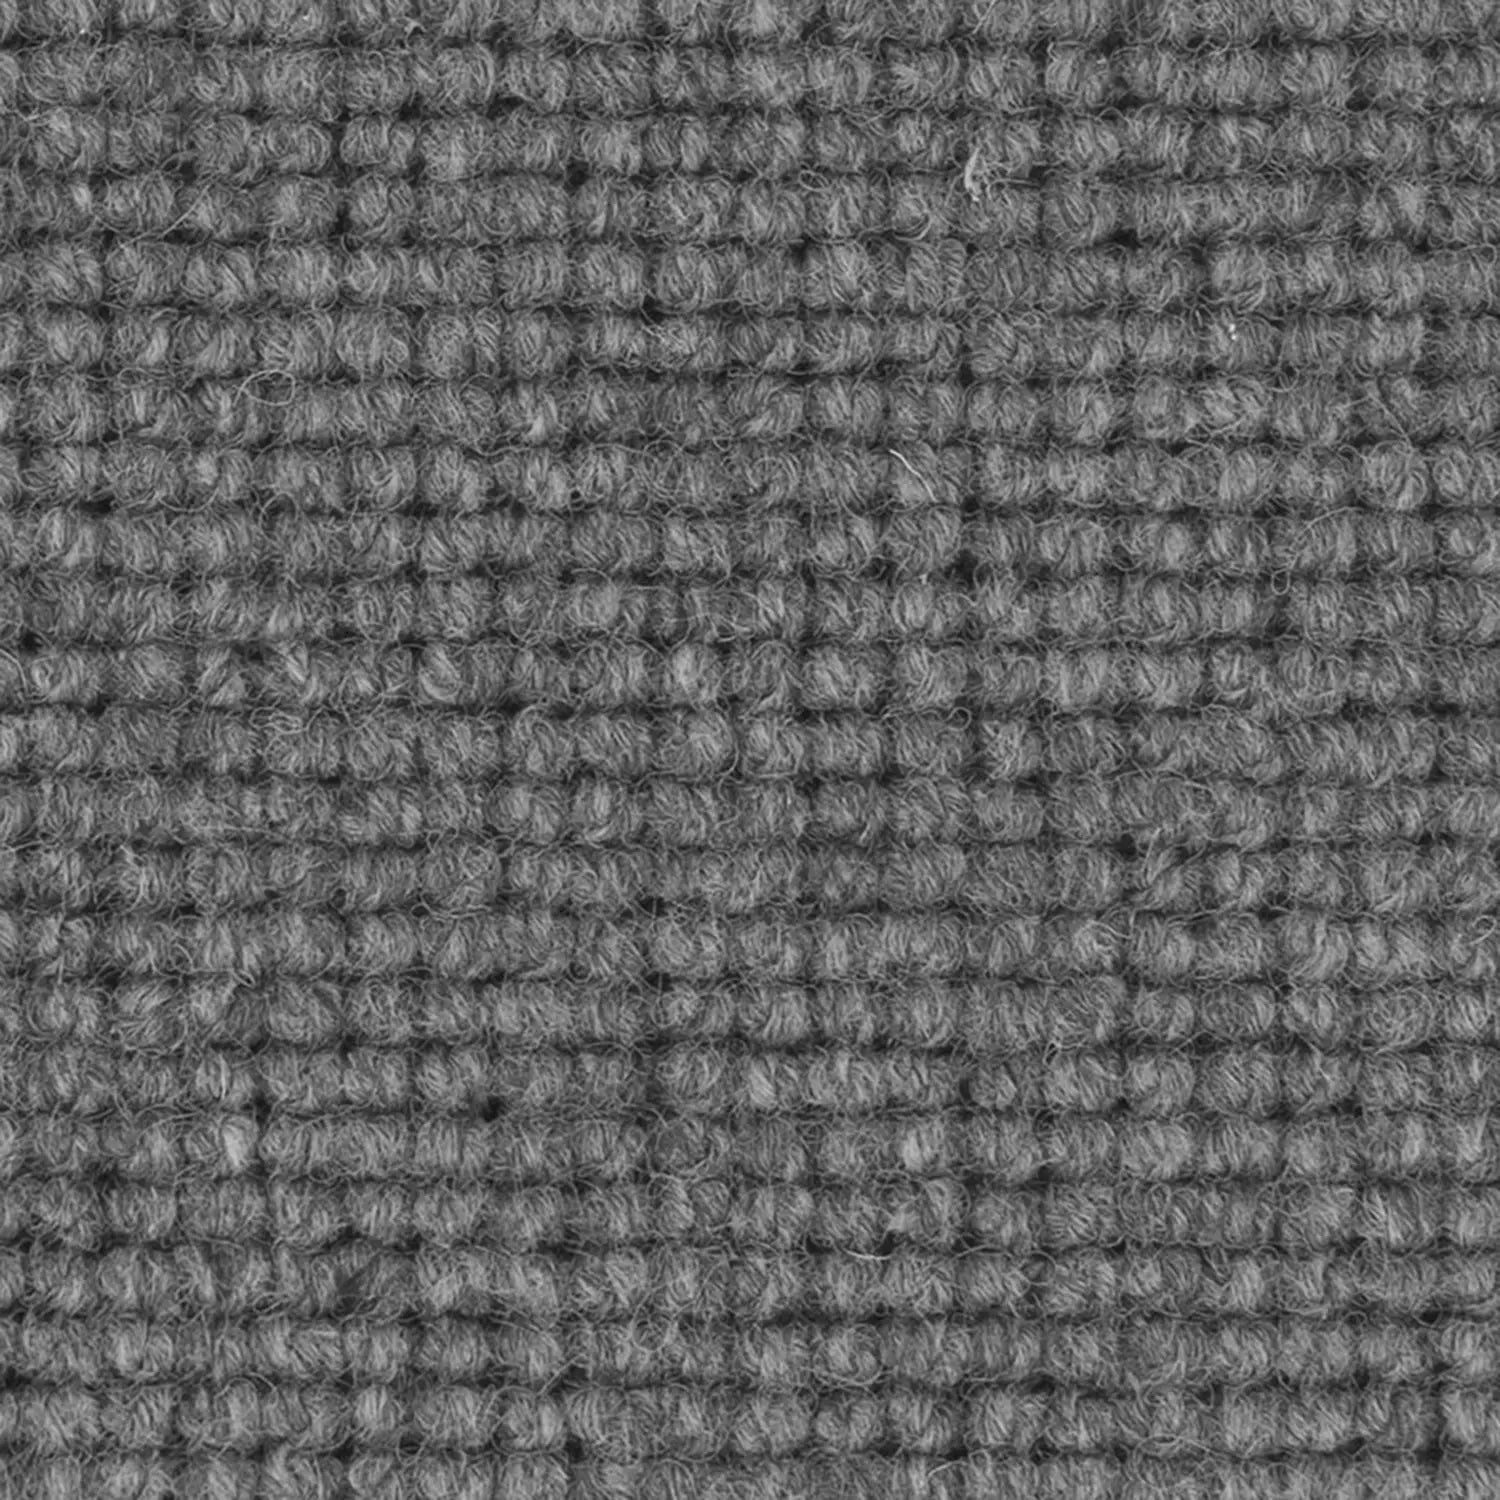 Pebble Grid Wool Carpet - Carpet - Rugs a Million